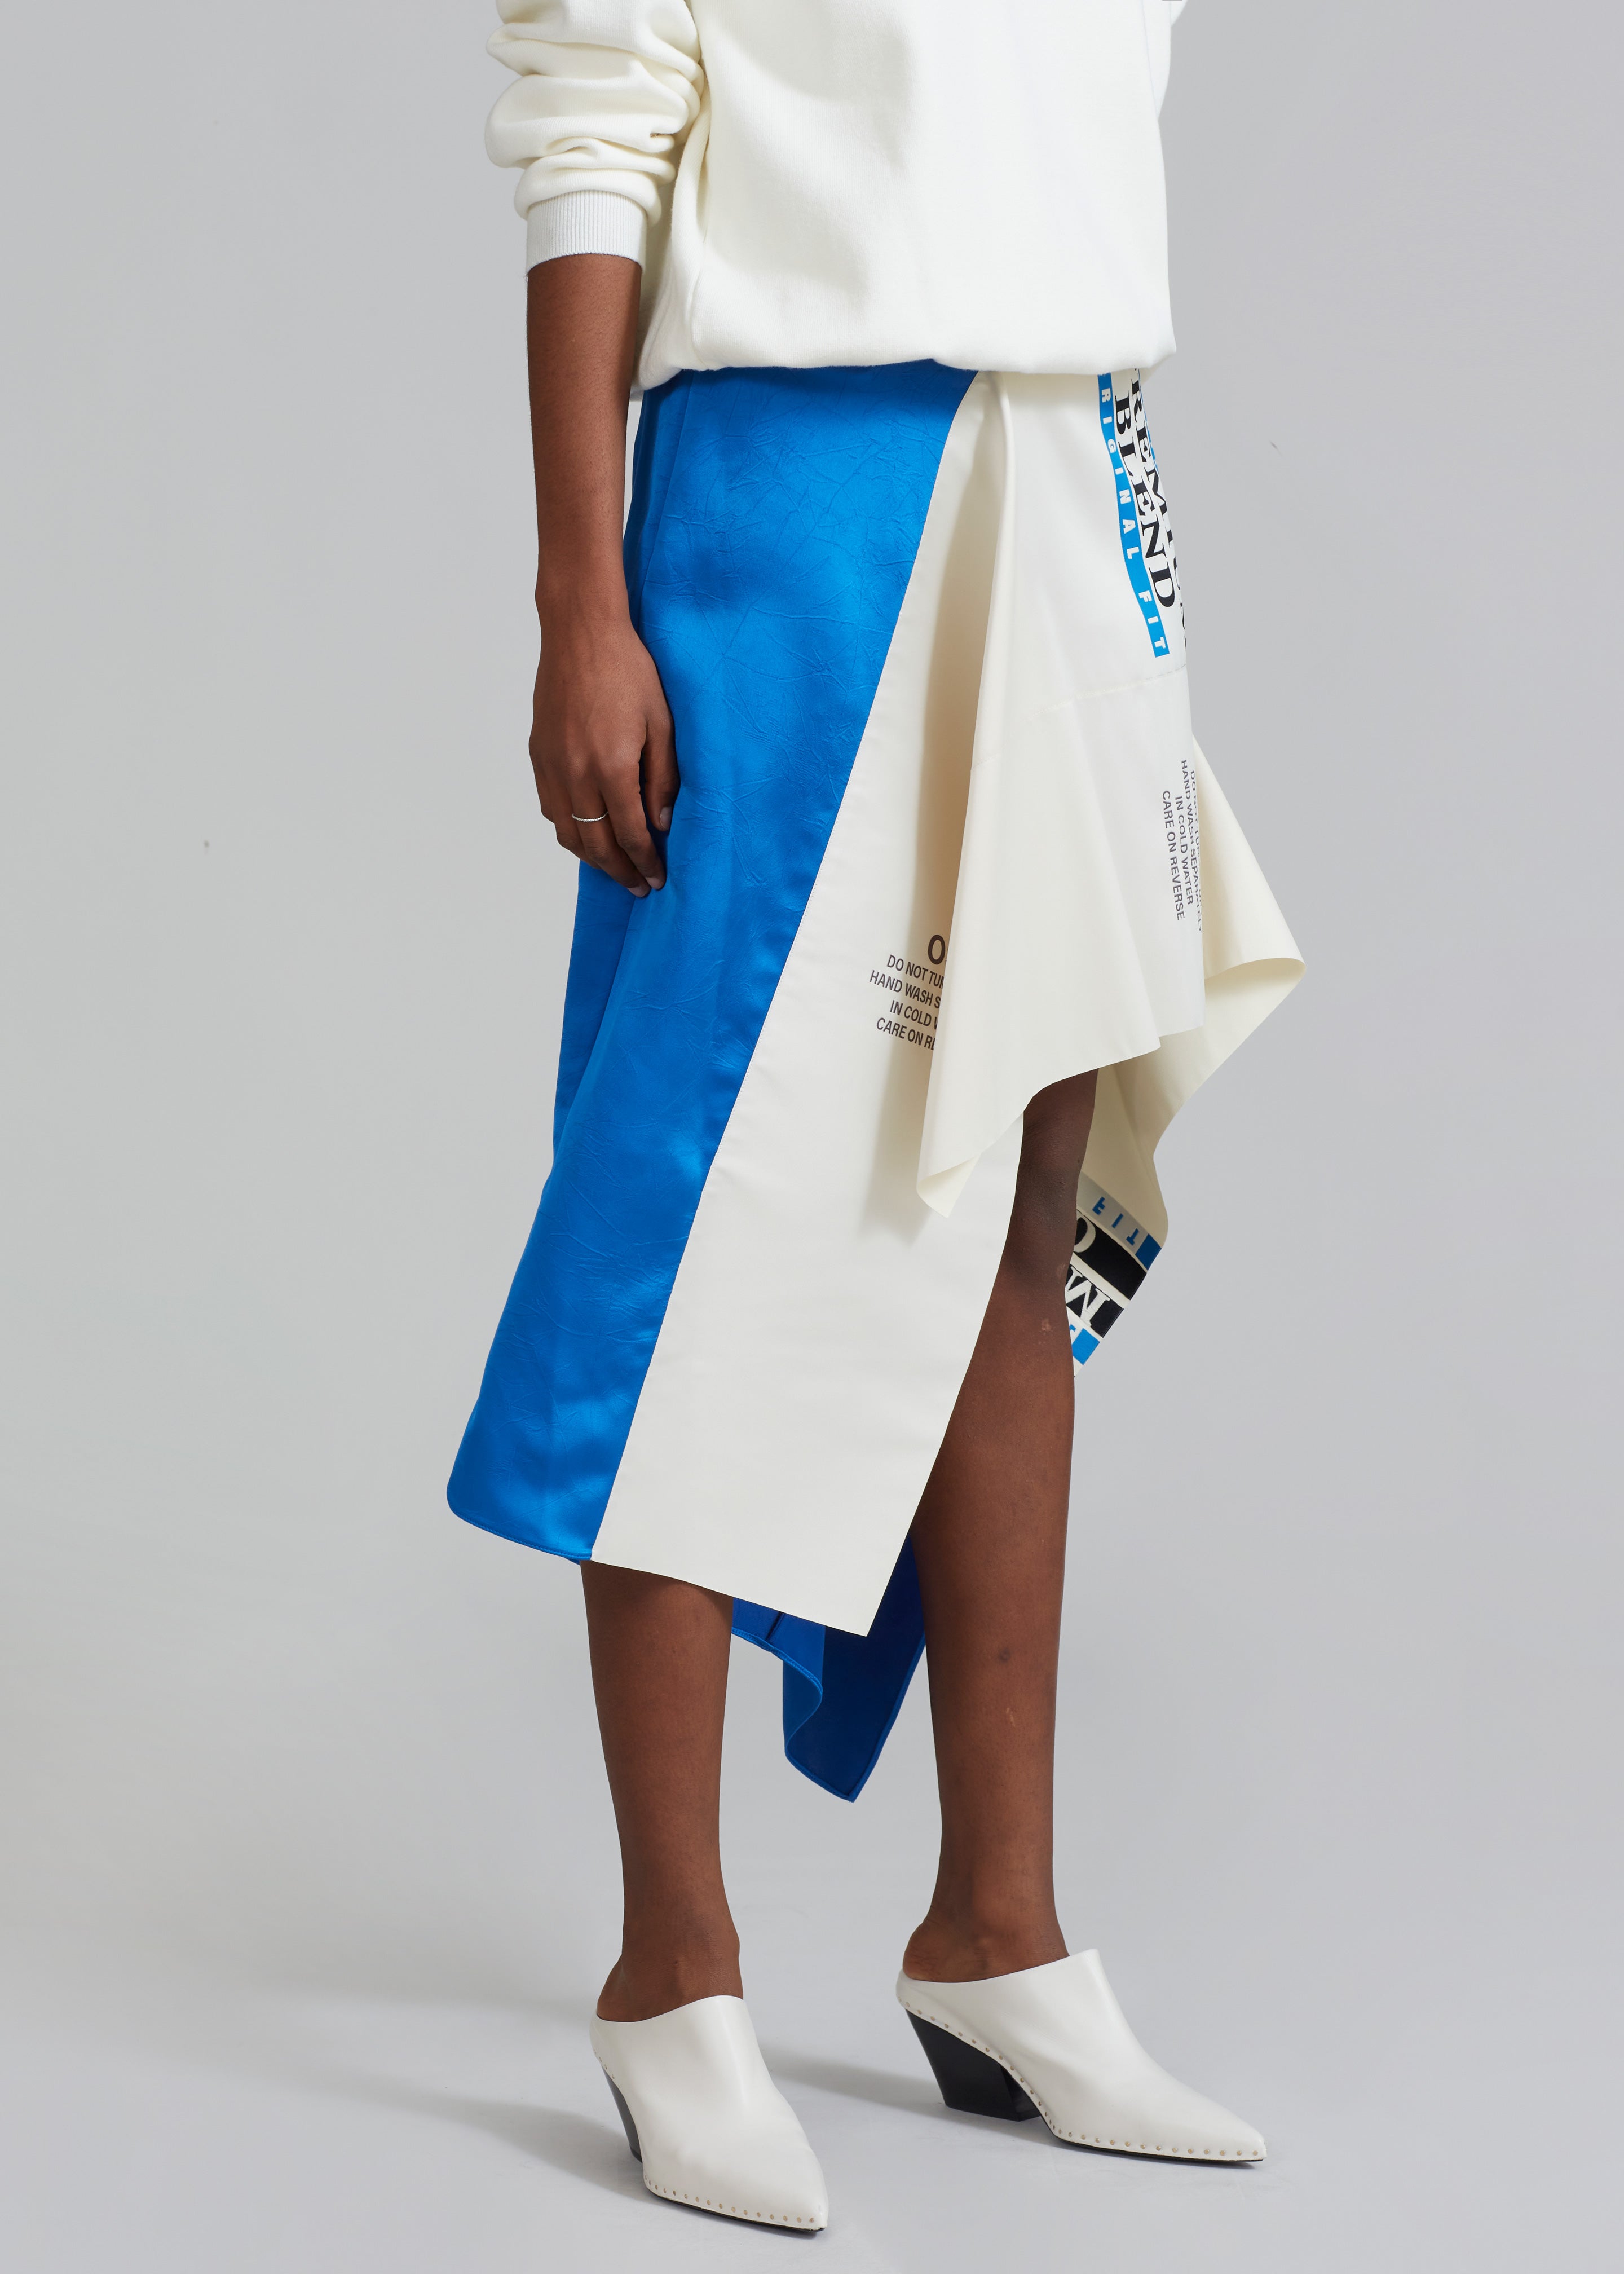 JW Anderson Asymmetric Care Label Skirt - Blue/White - 6